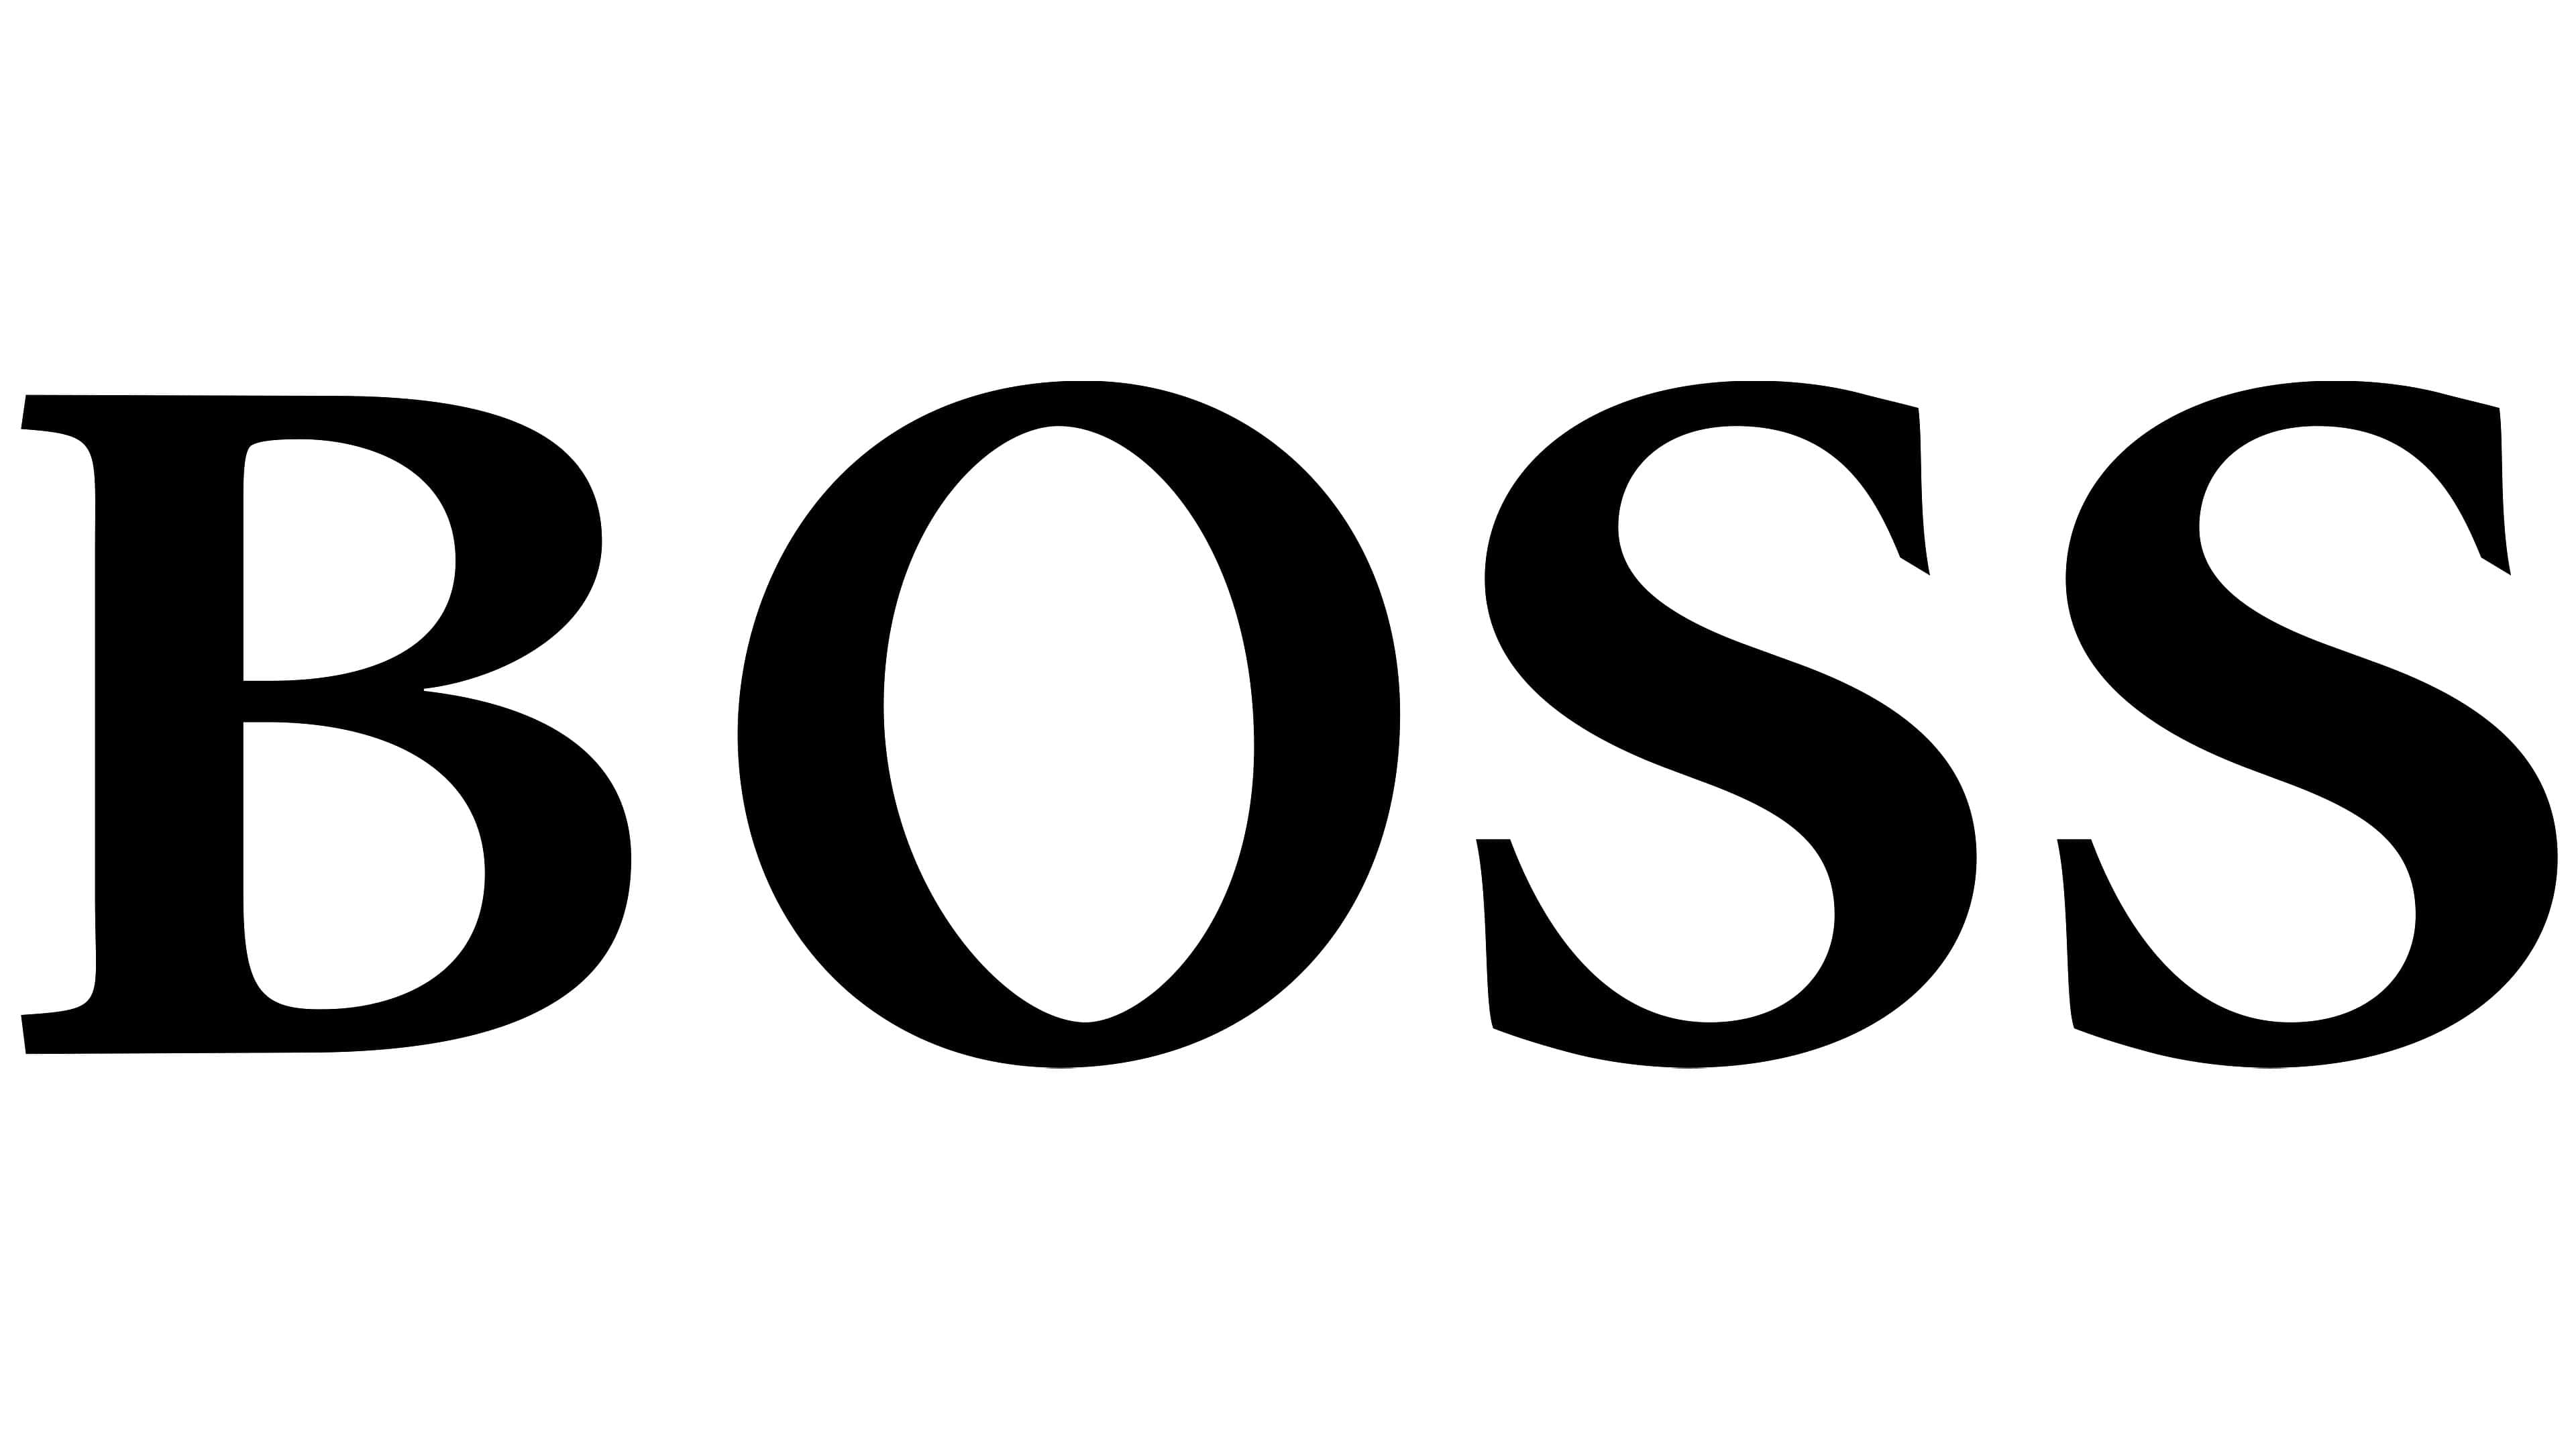 Хуга босс. Хьюго босс logo. Босс Хуго босс логотип. Хуго босс лого духи. Хуго босс логотип Парфюм.